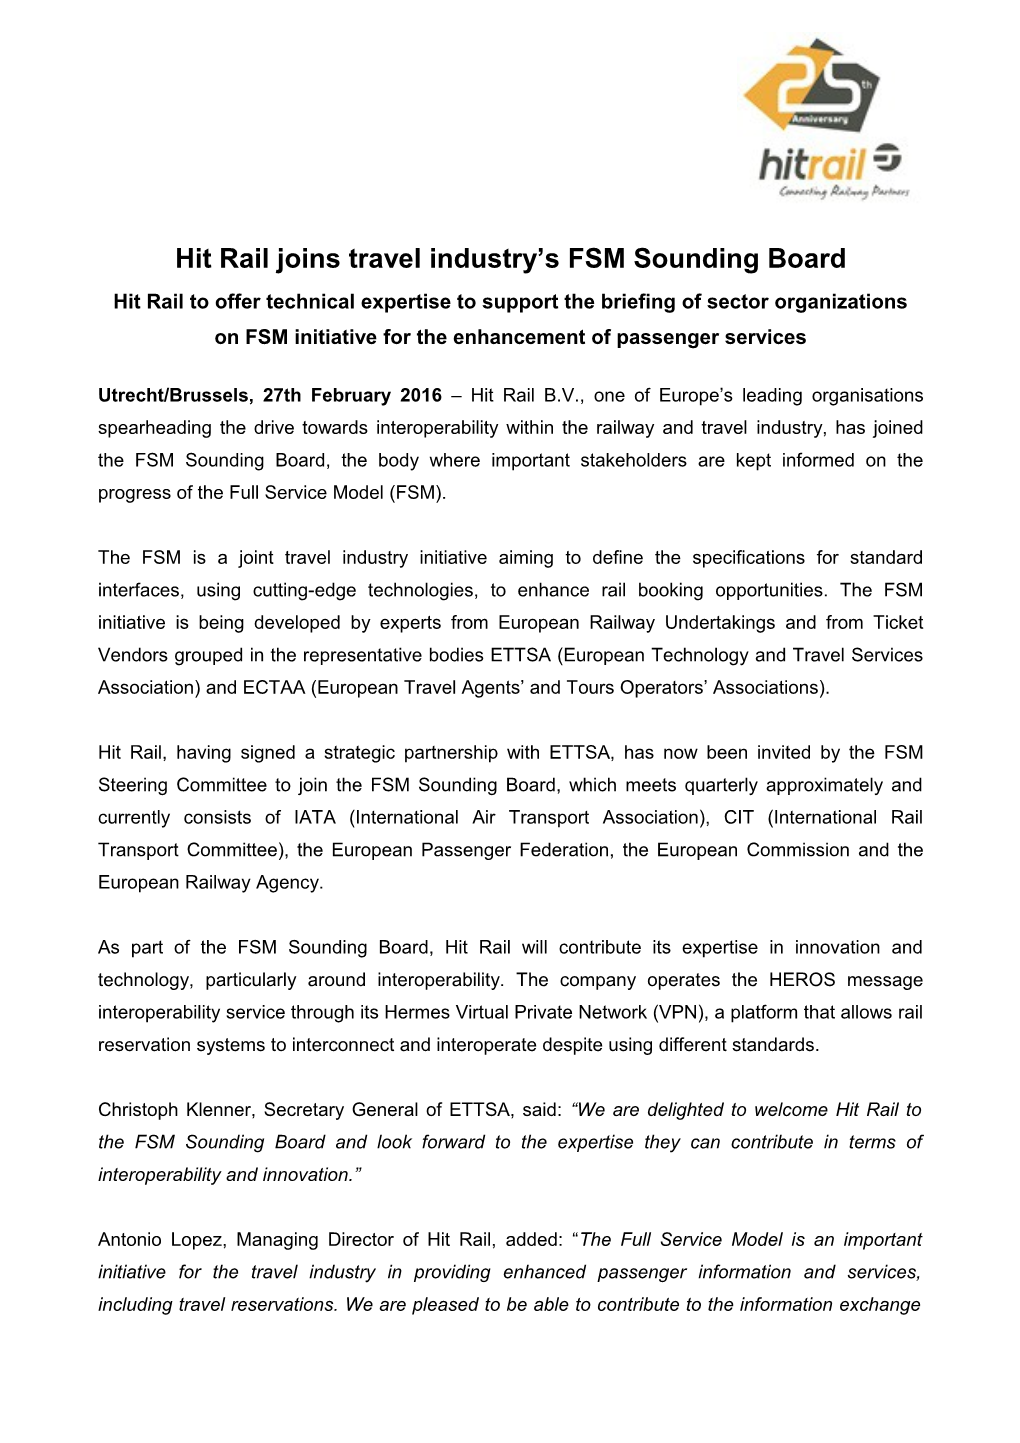 Hit Rail Helps Modernize the European Rail Distribution